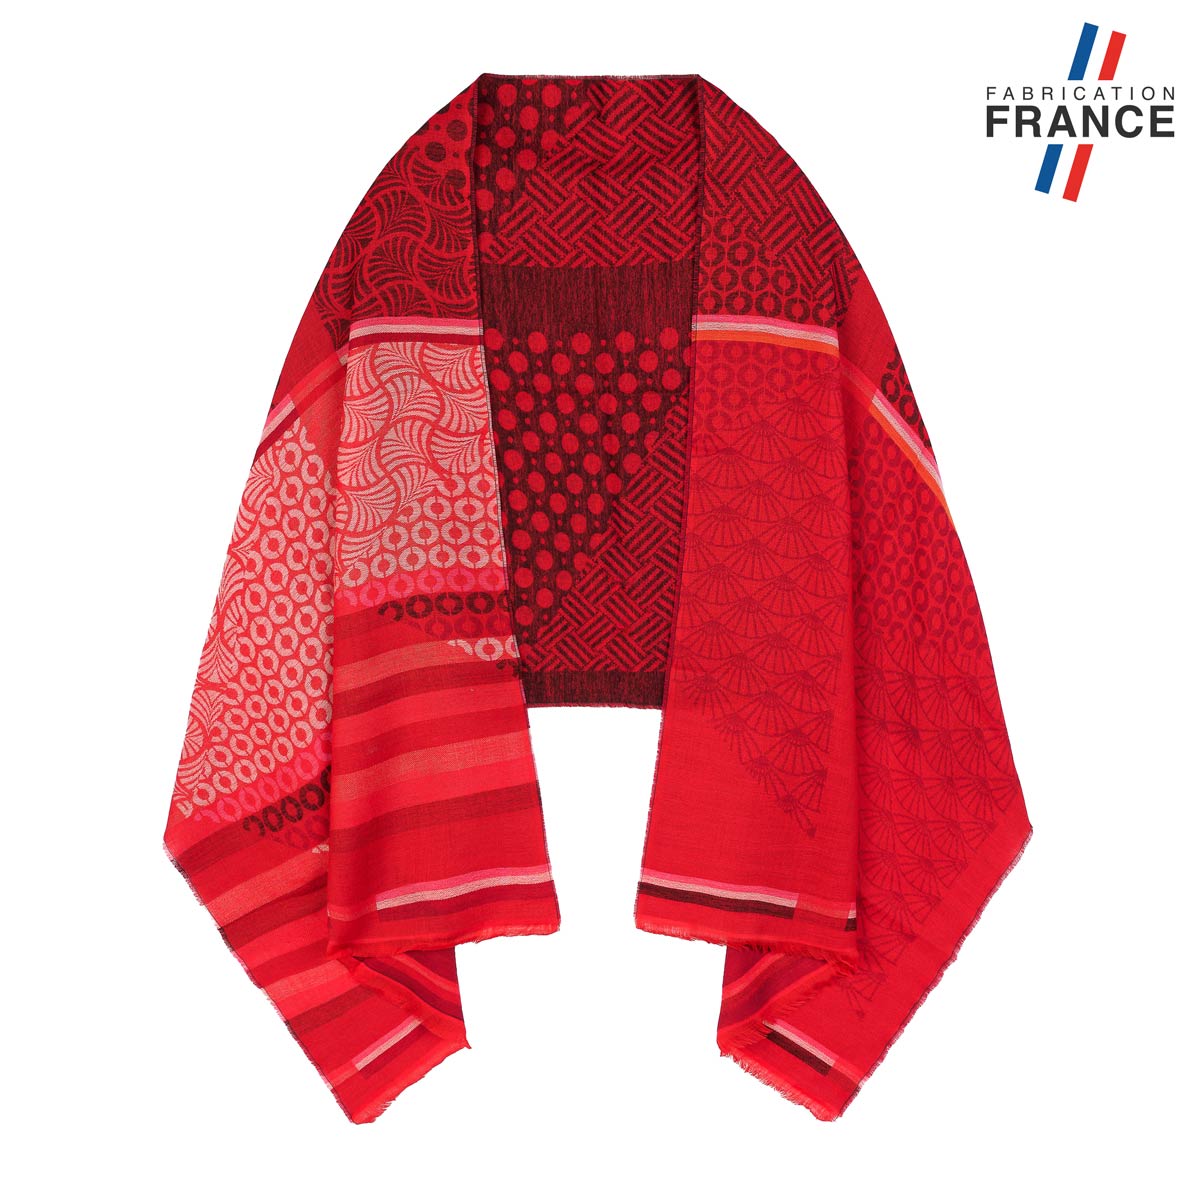 AT-06944_F12-1FR_Chale-hiver-fantaisie-rouge-bordeaux-fabrication-francaise